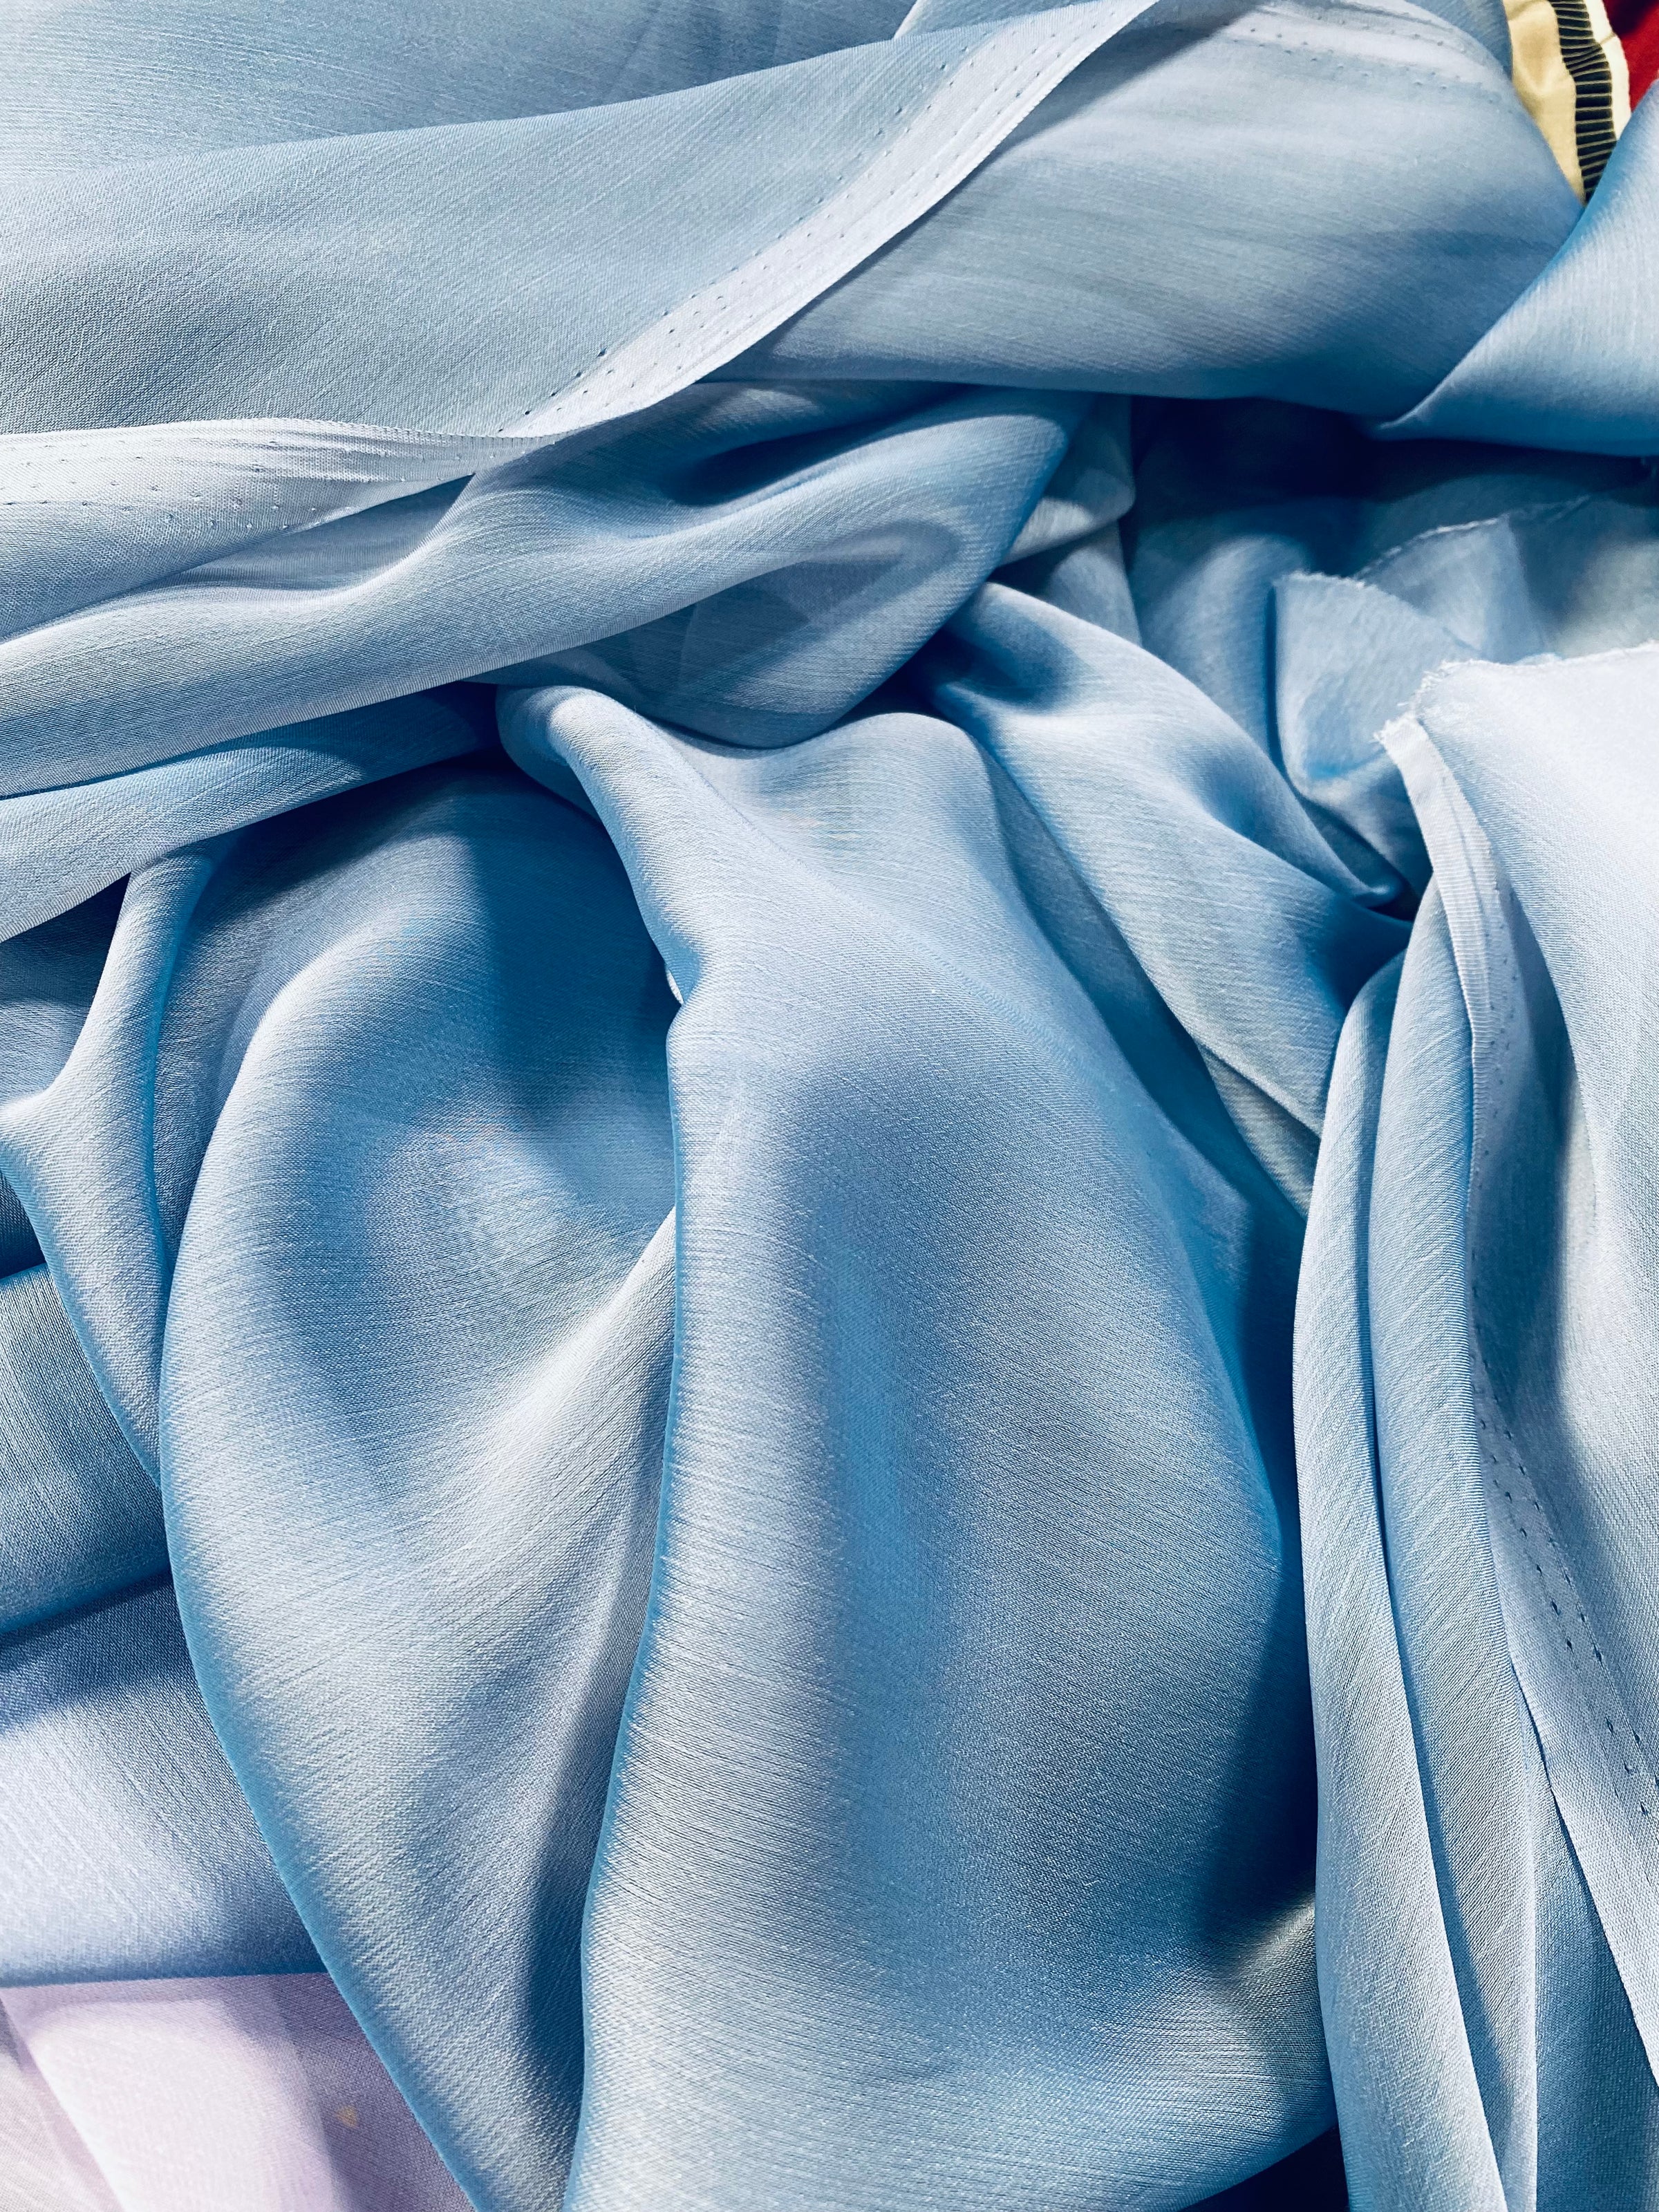 light blue silk background